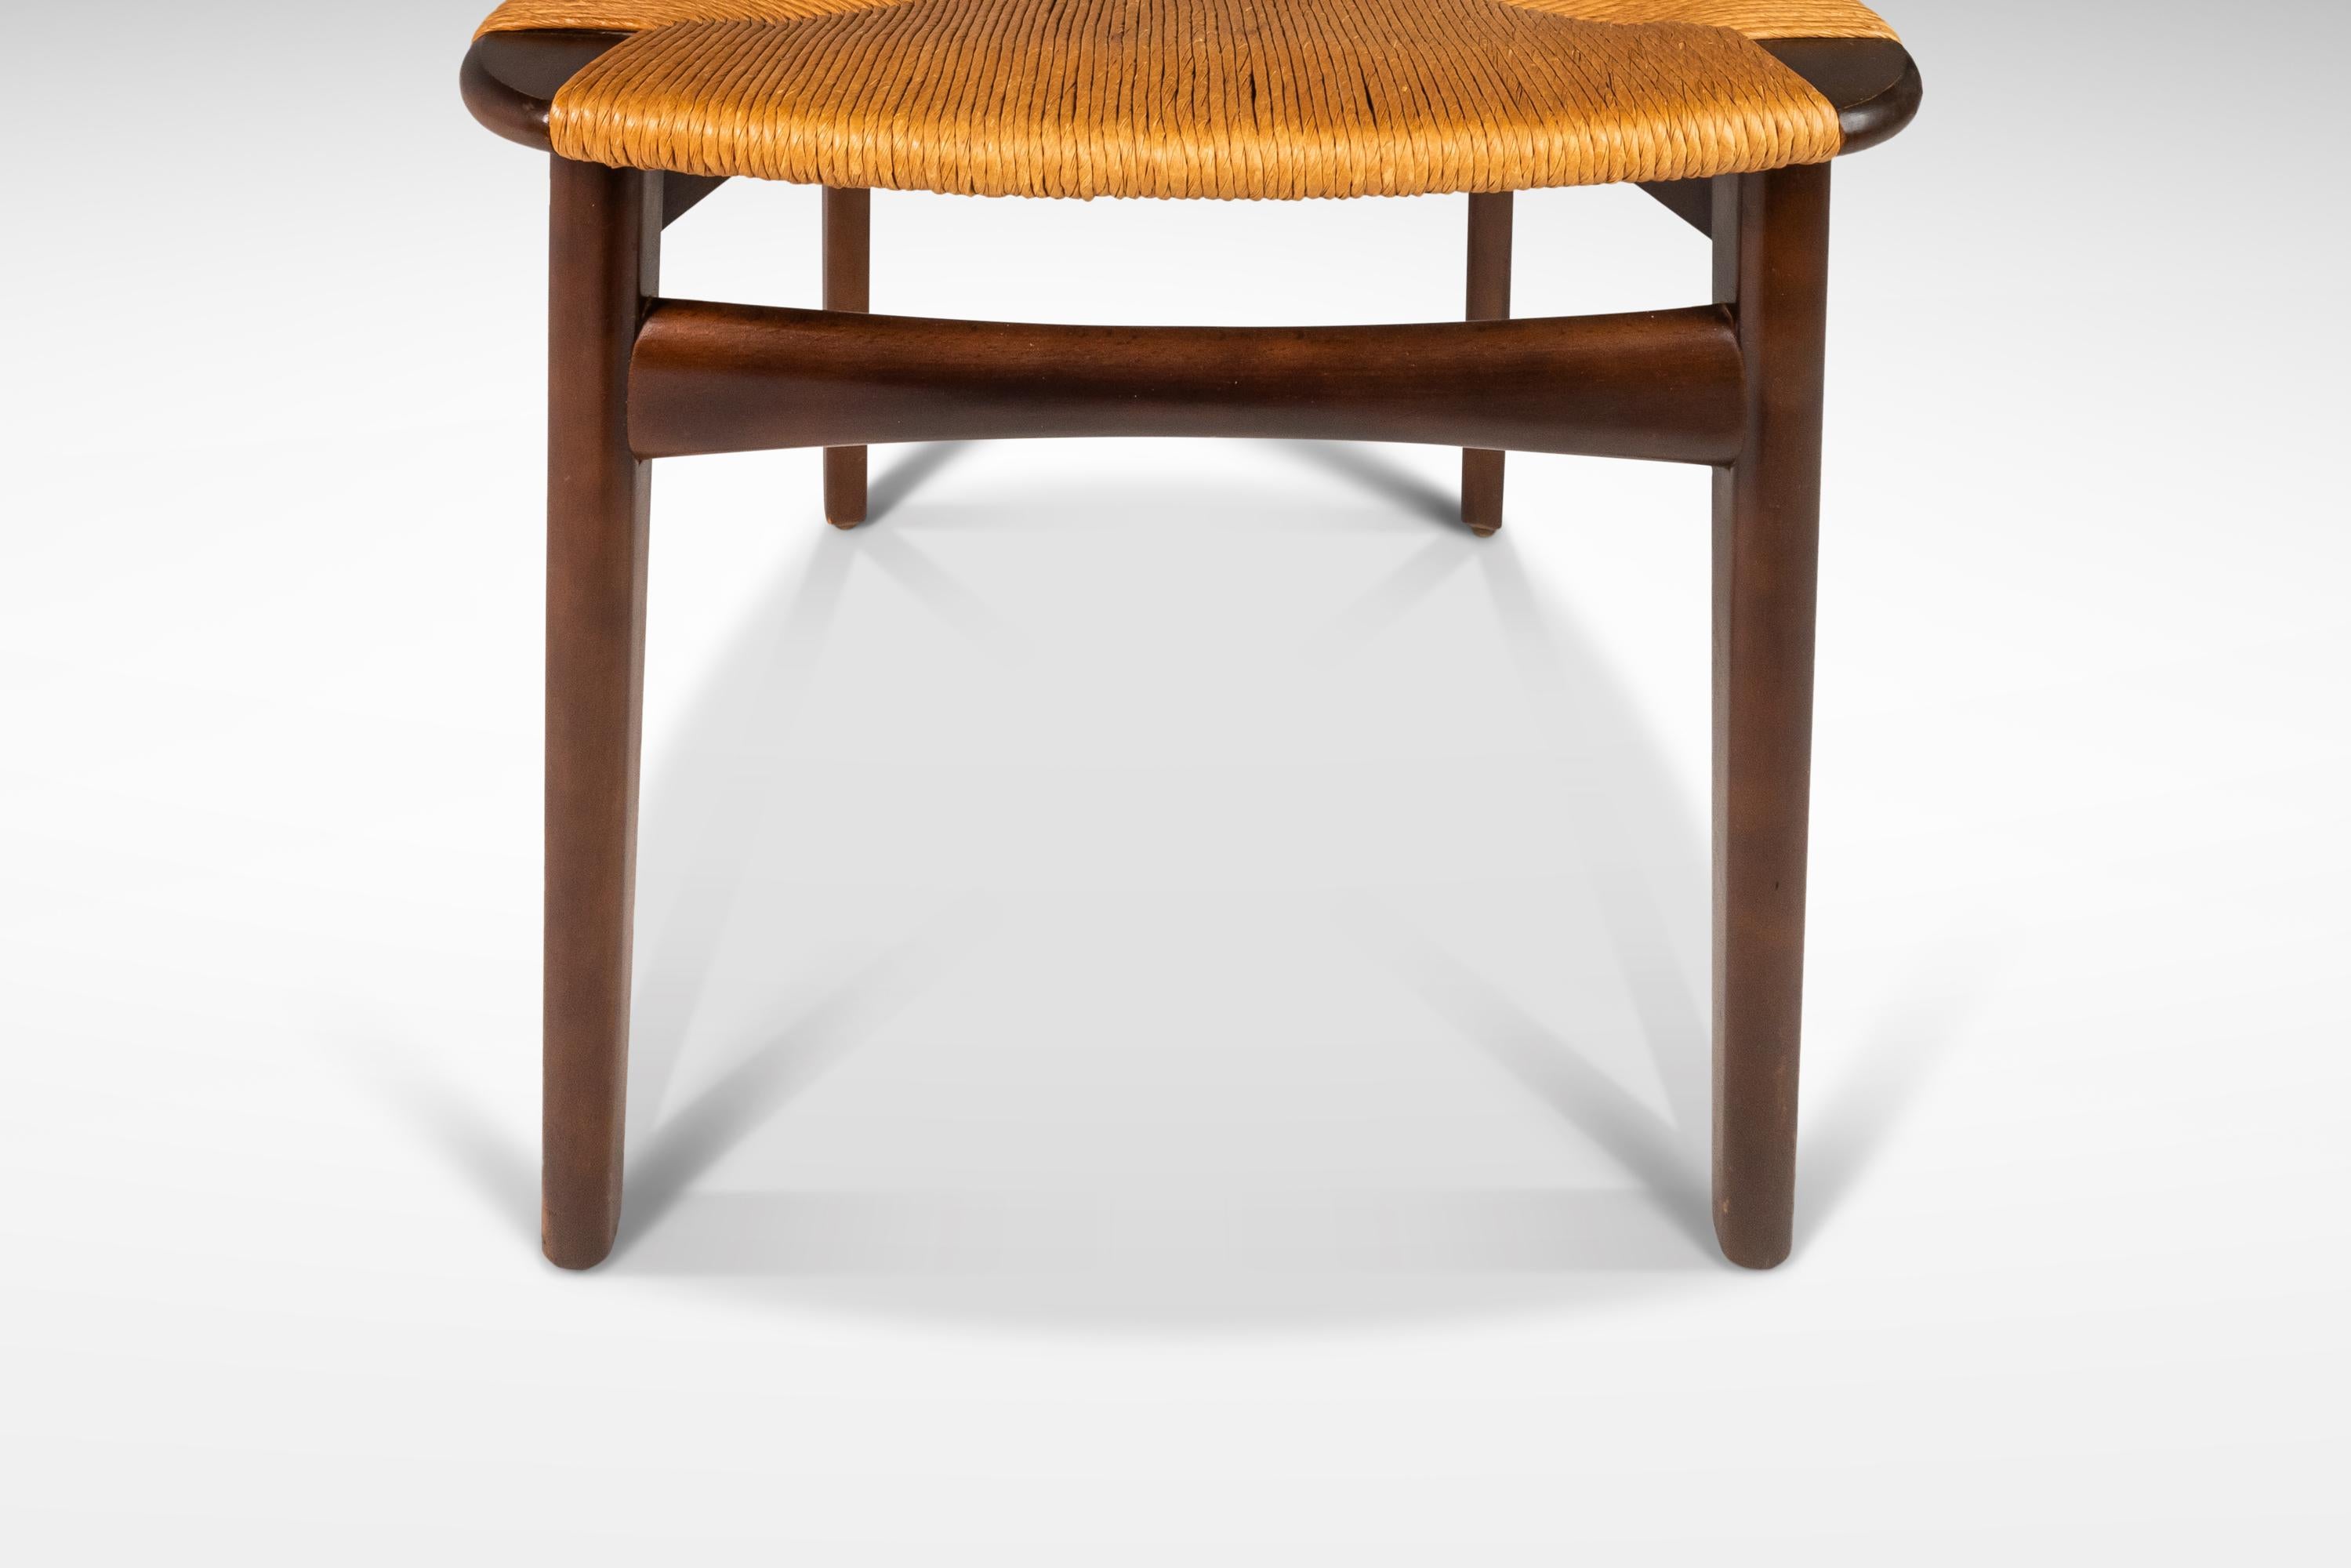 Set of Four (4) Danish Modern Thrush Dining Chairs After Hans J. Wegner, c. 1960 For Sale 10